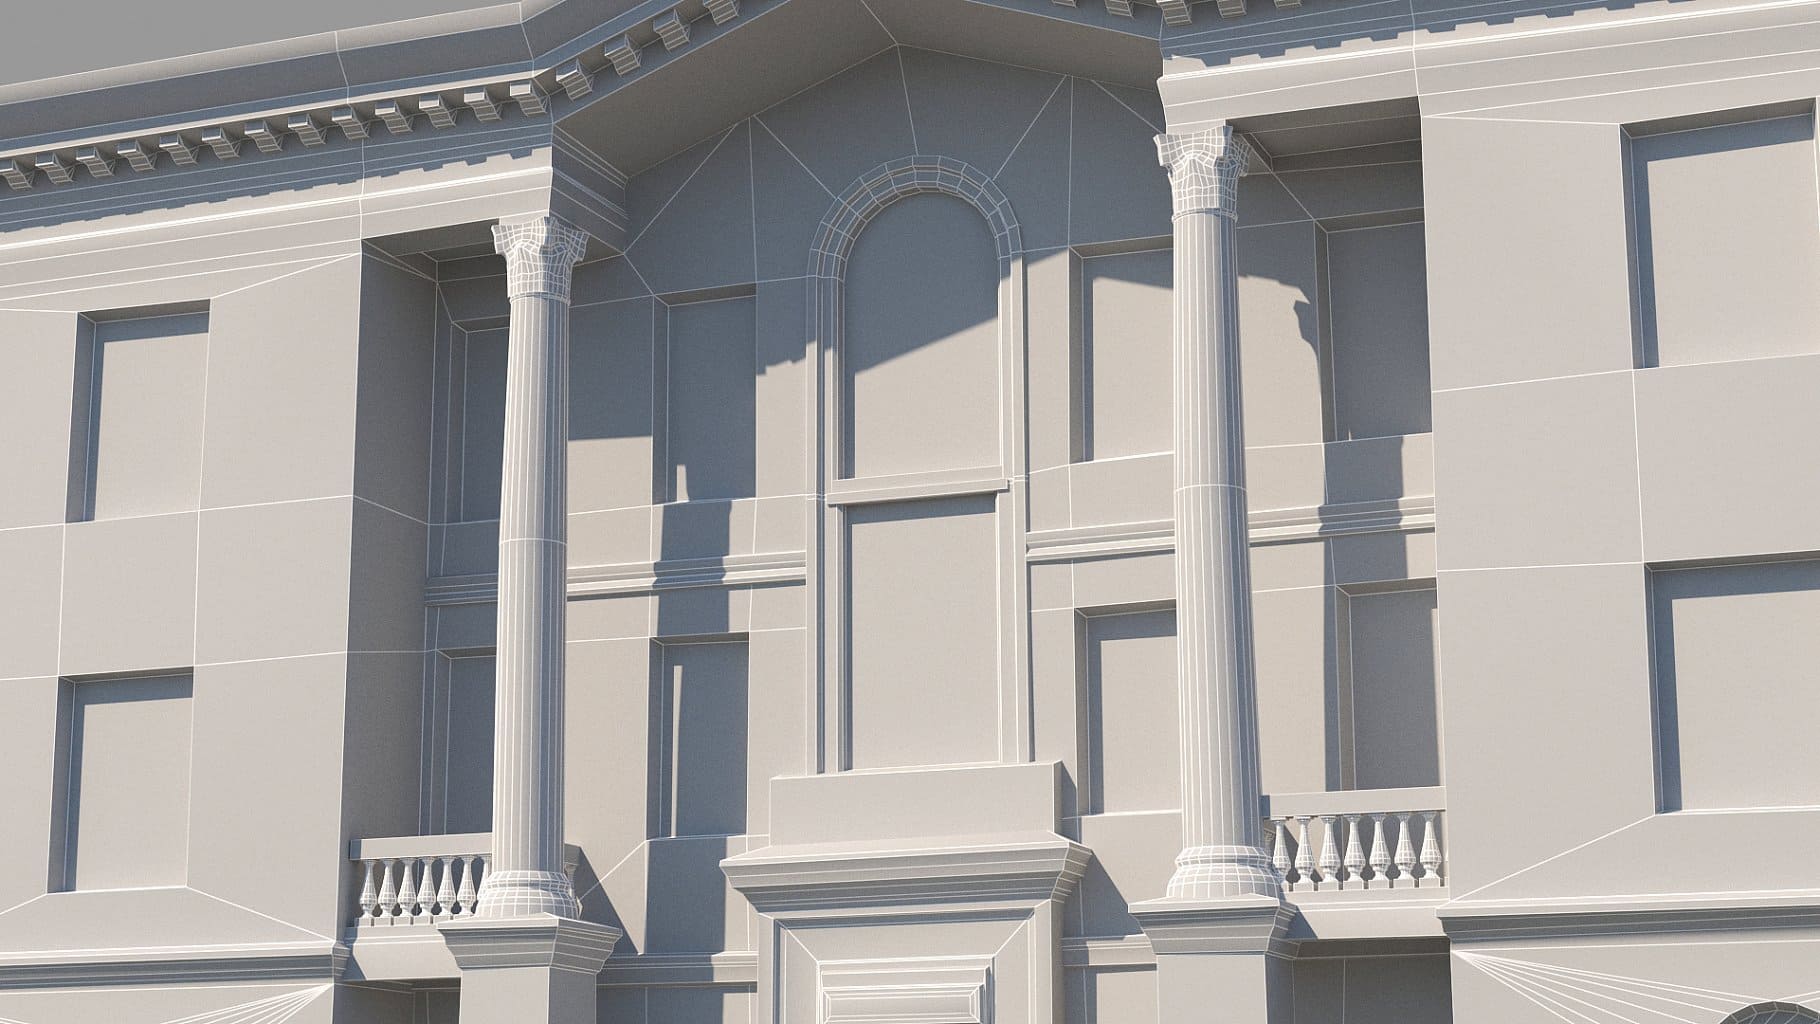 Rectangular and semicircular windows in the Classic Building Facade.